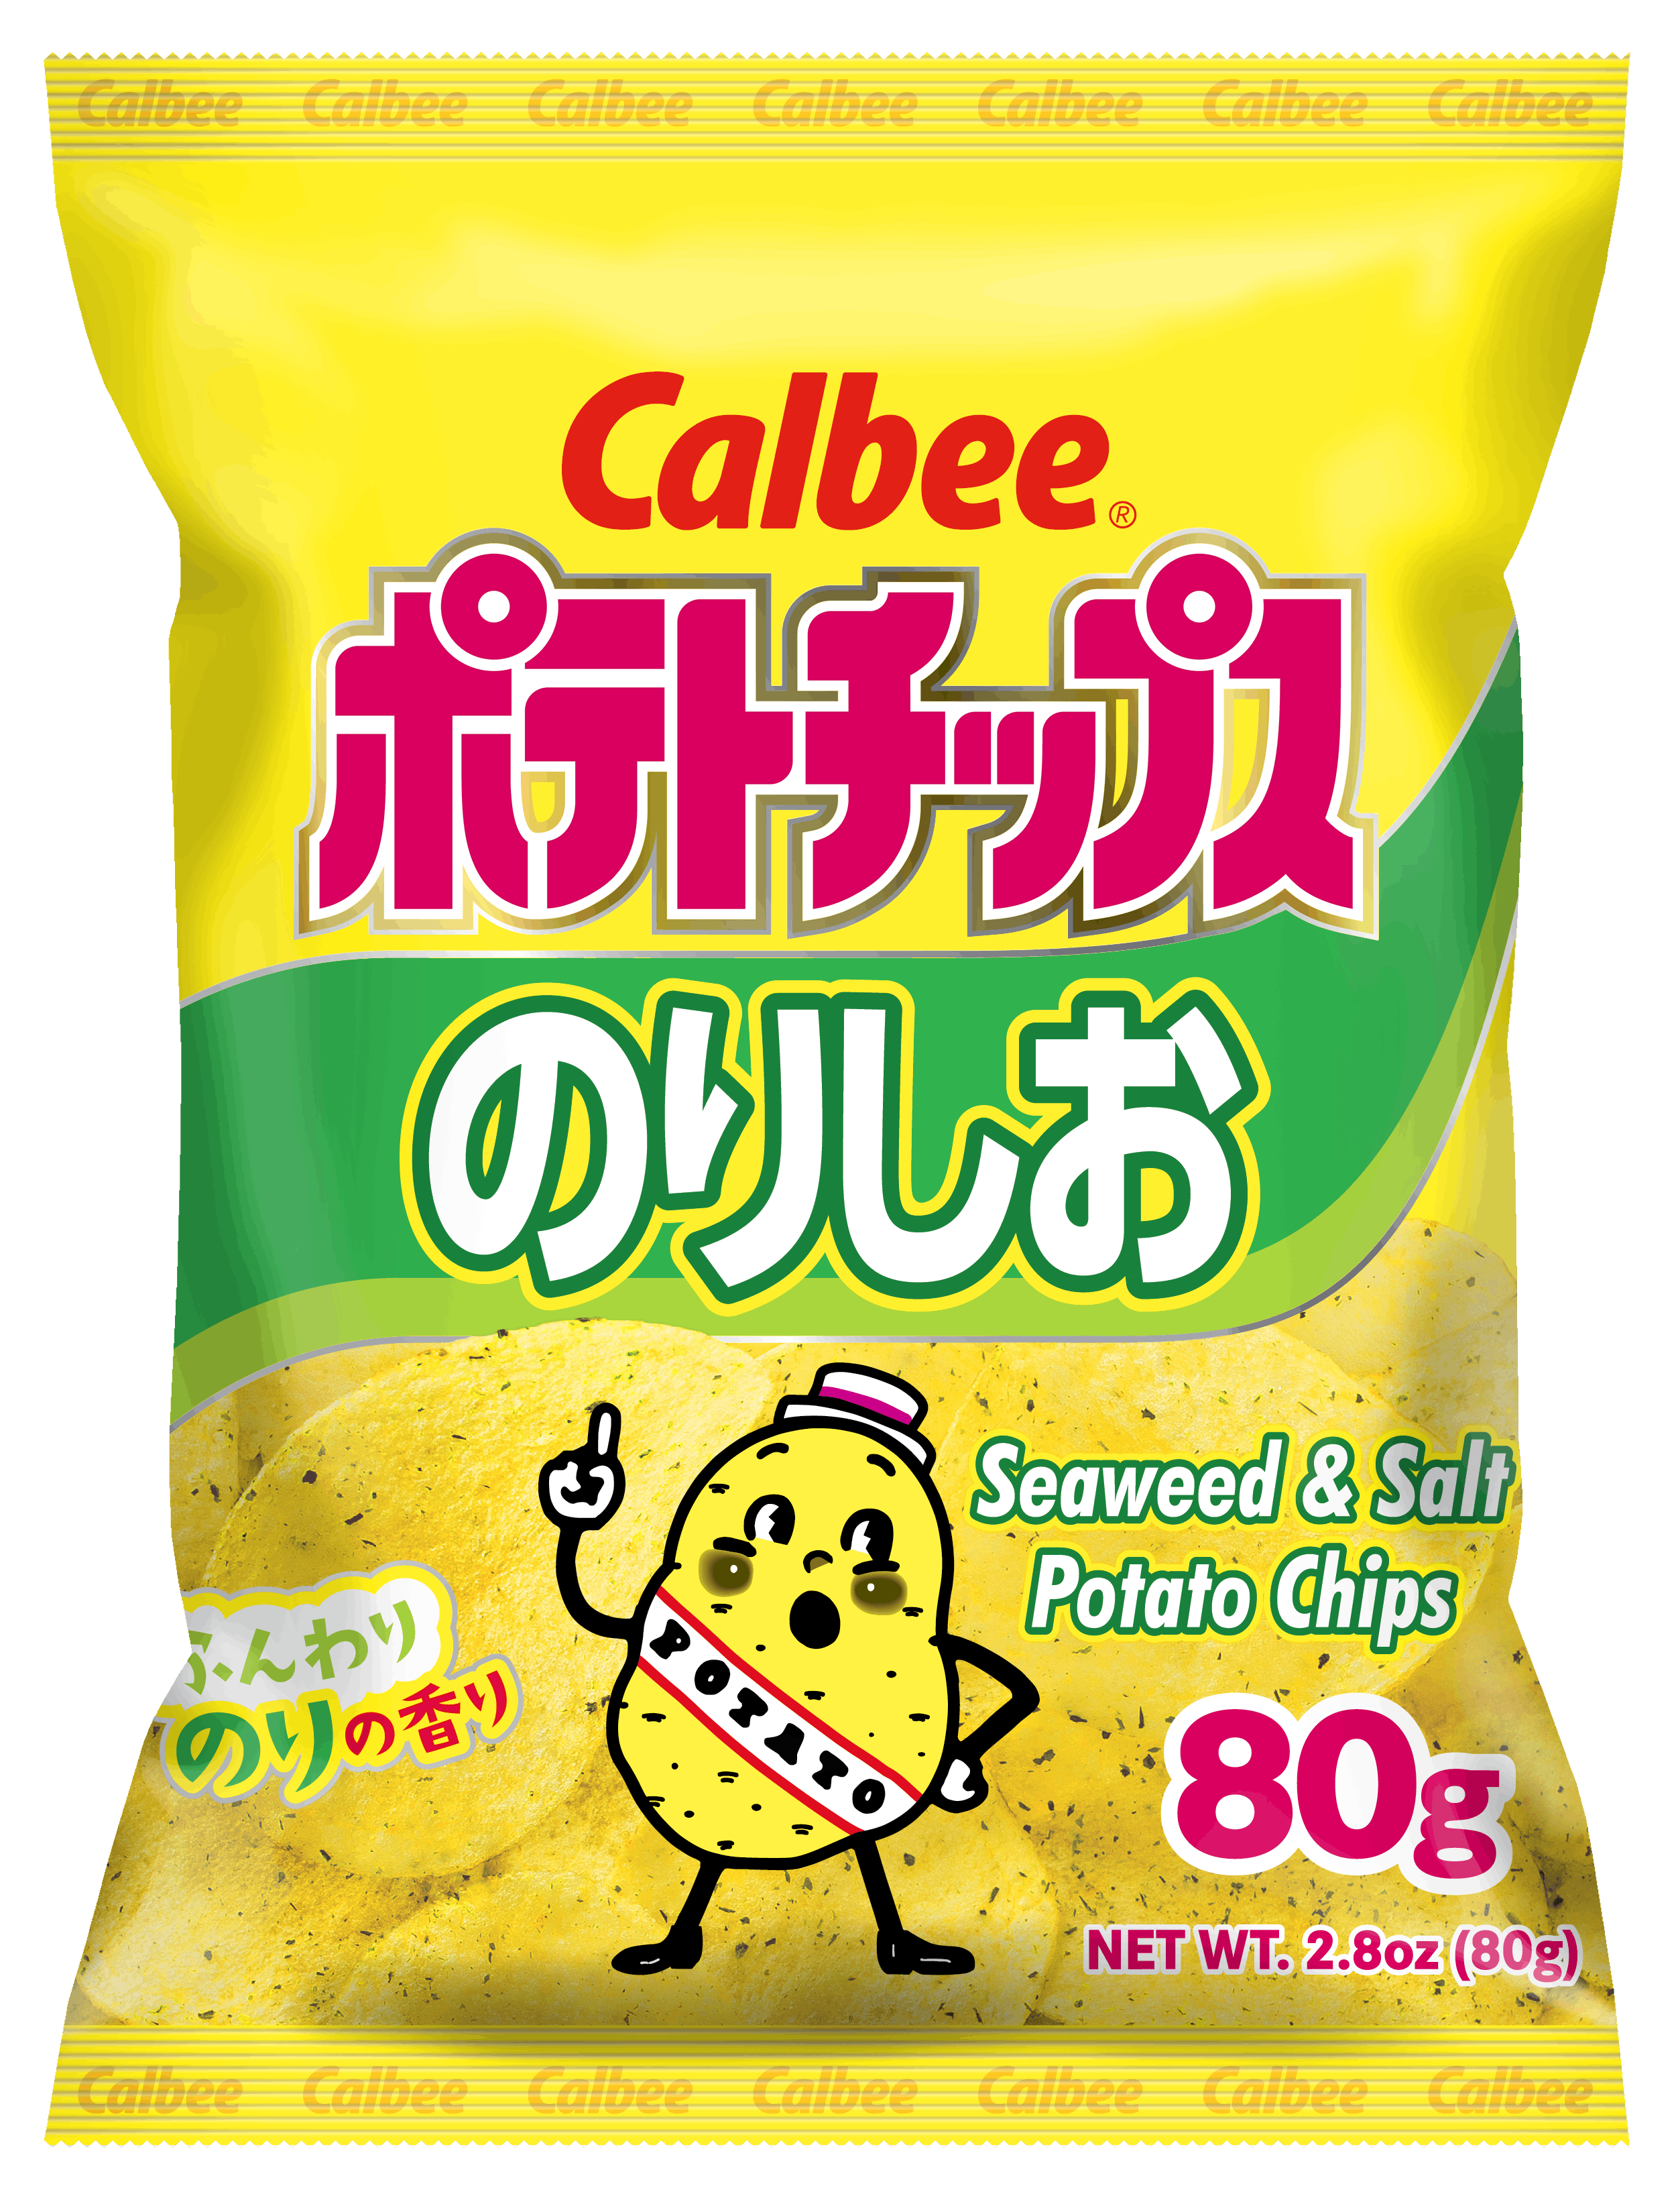 Calbee Potato Chips - Seaweed & Salt